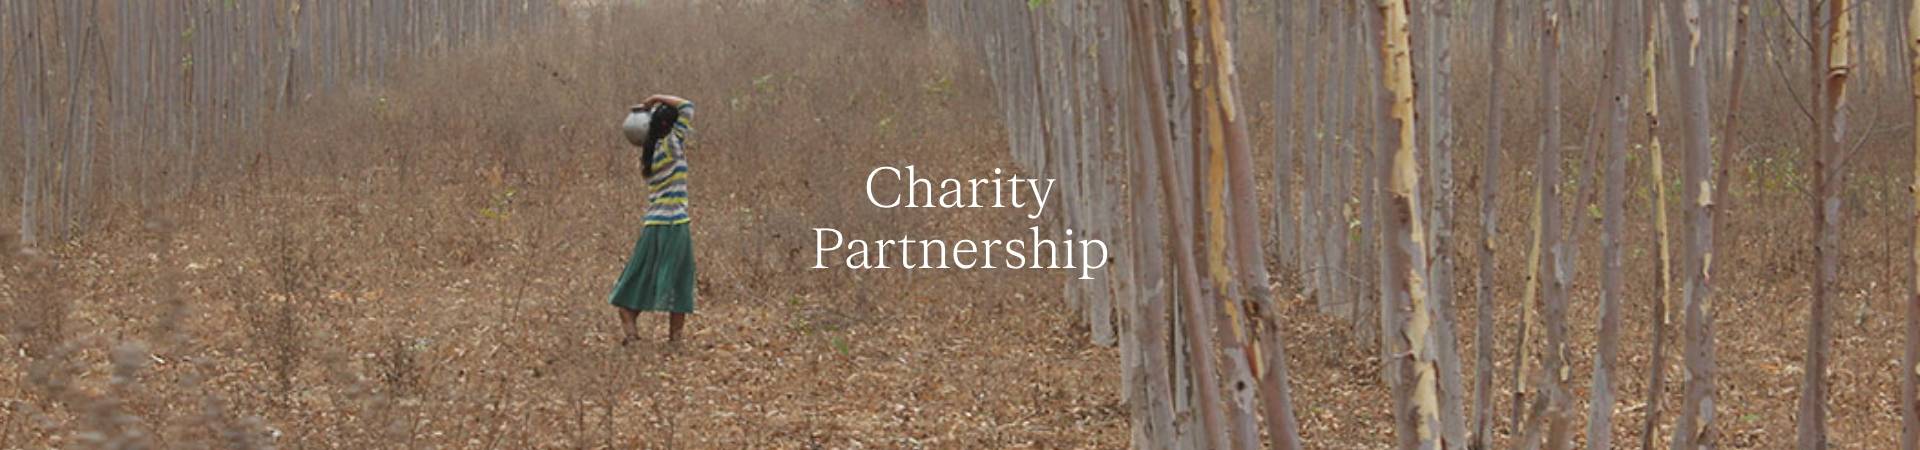 Charity Partnership.jpg